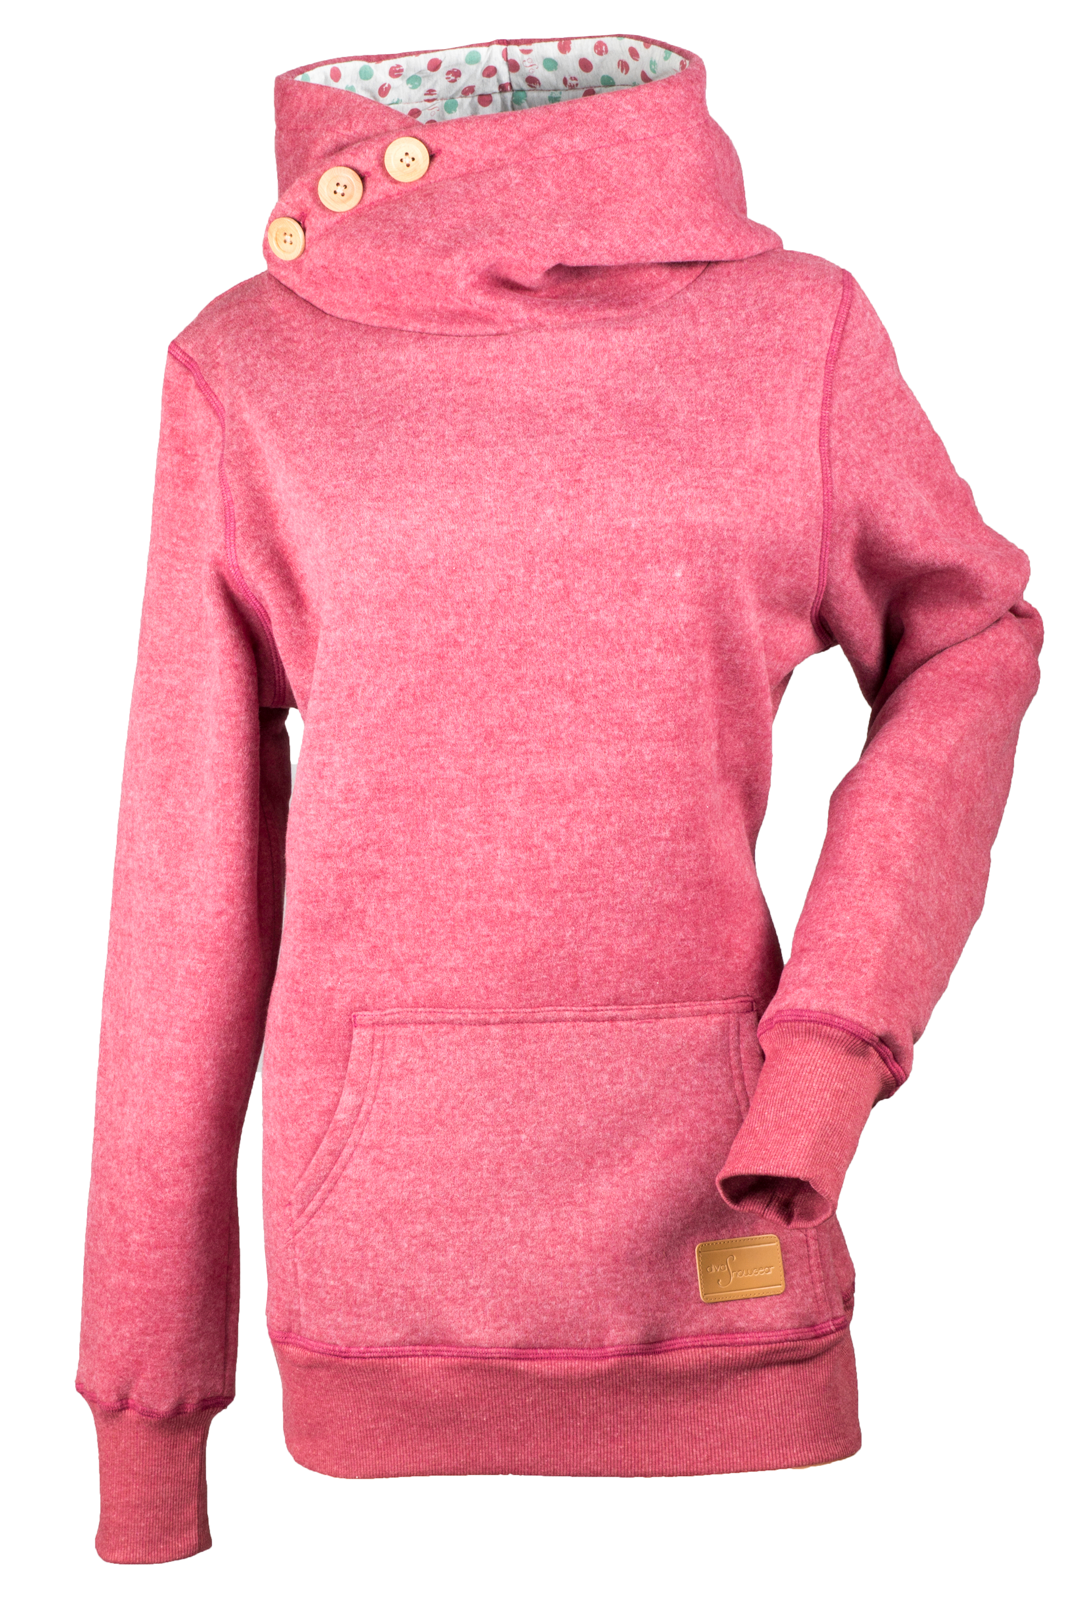 DSG Women's Hoodies & Sweatshirts